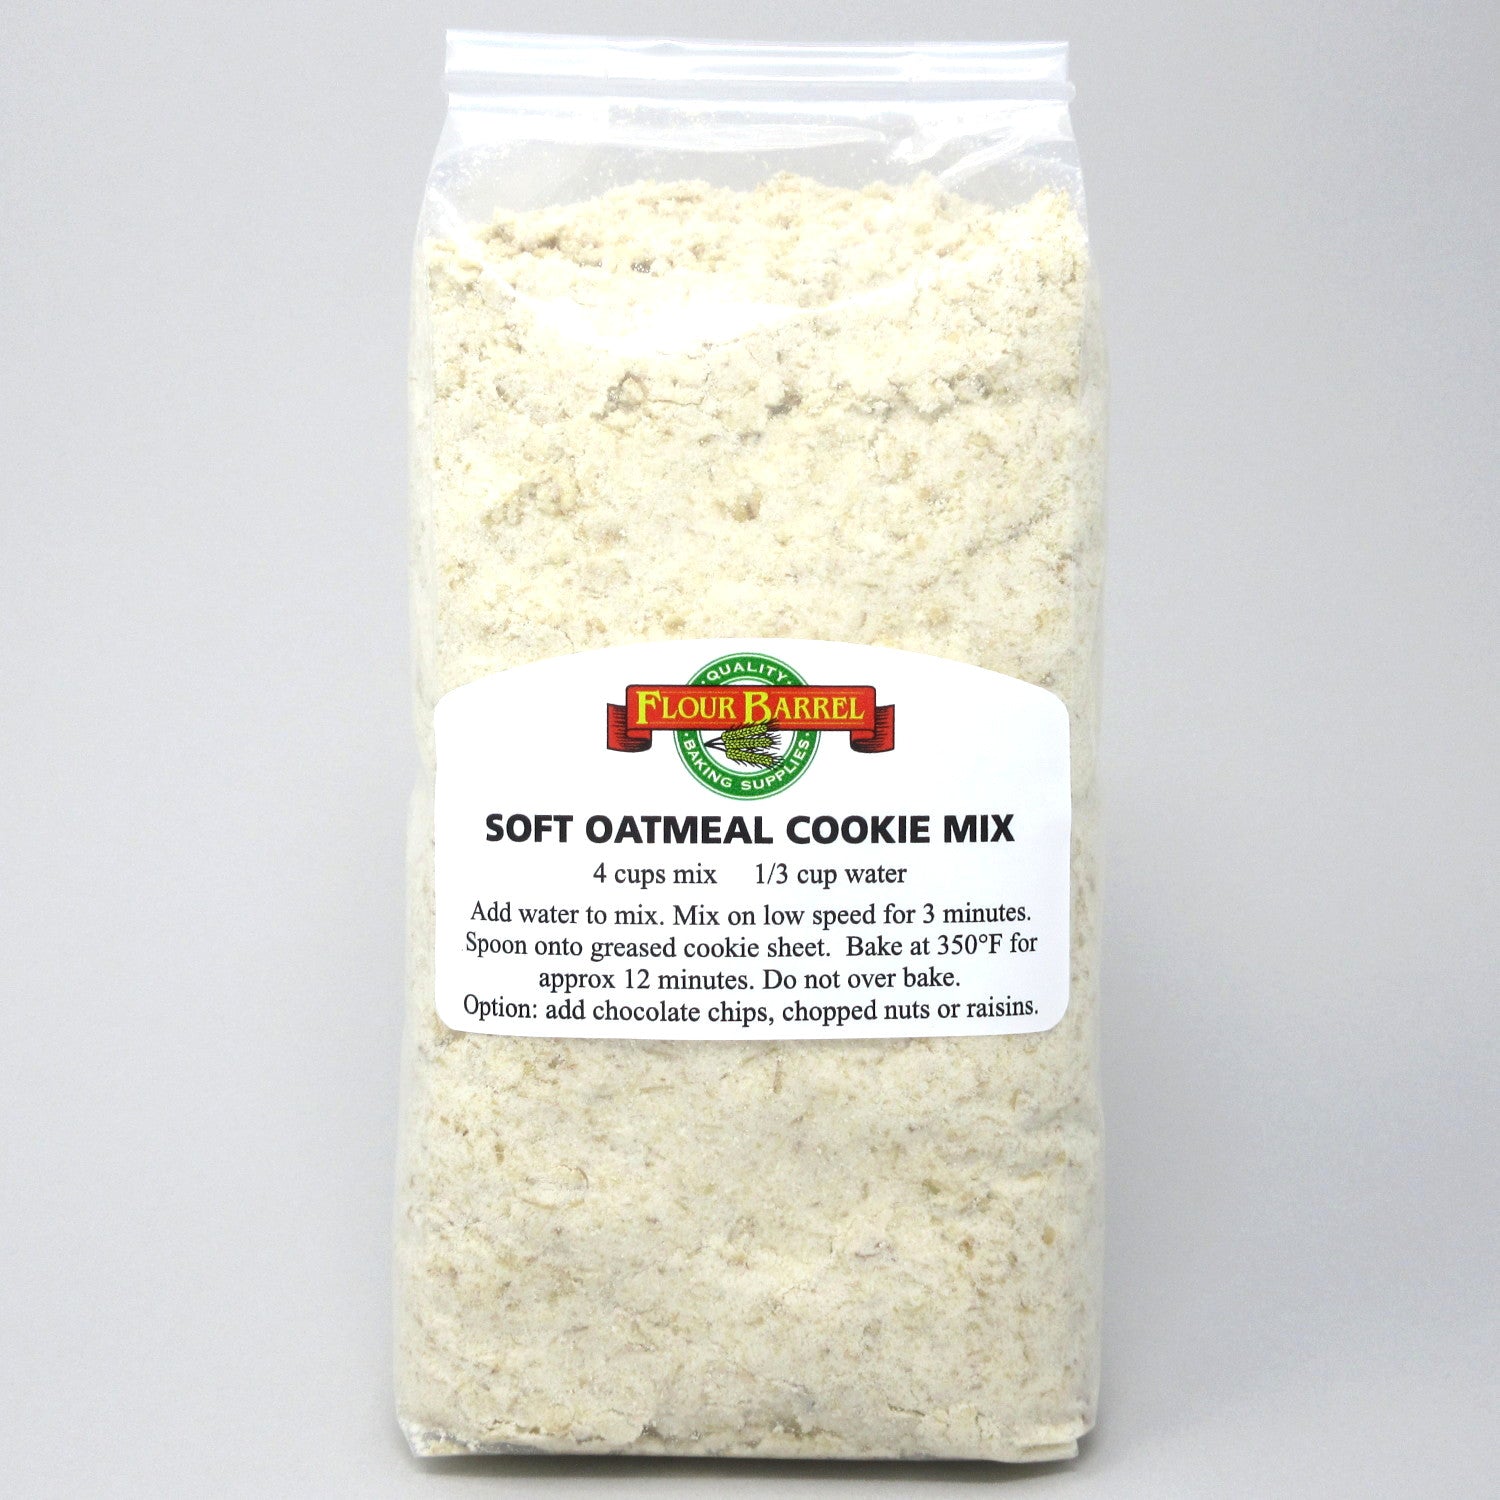 Flour Barrel product image - Soft Oatmeal Cookie Mix